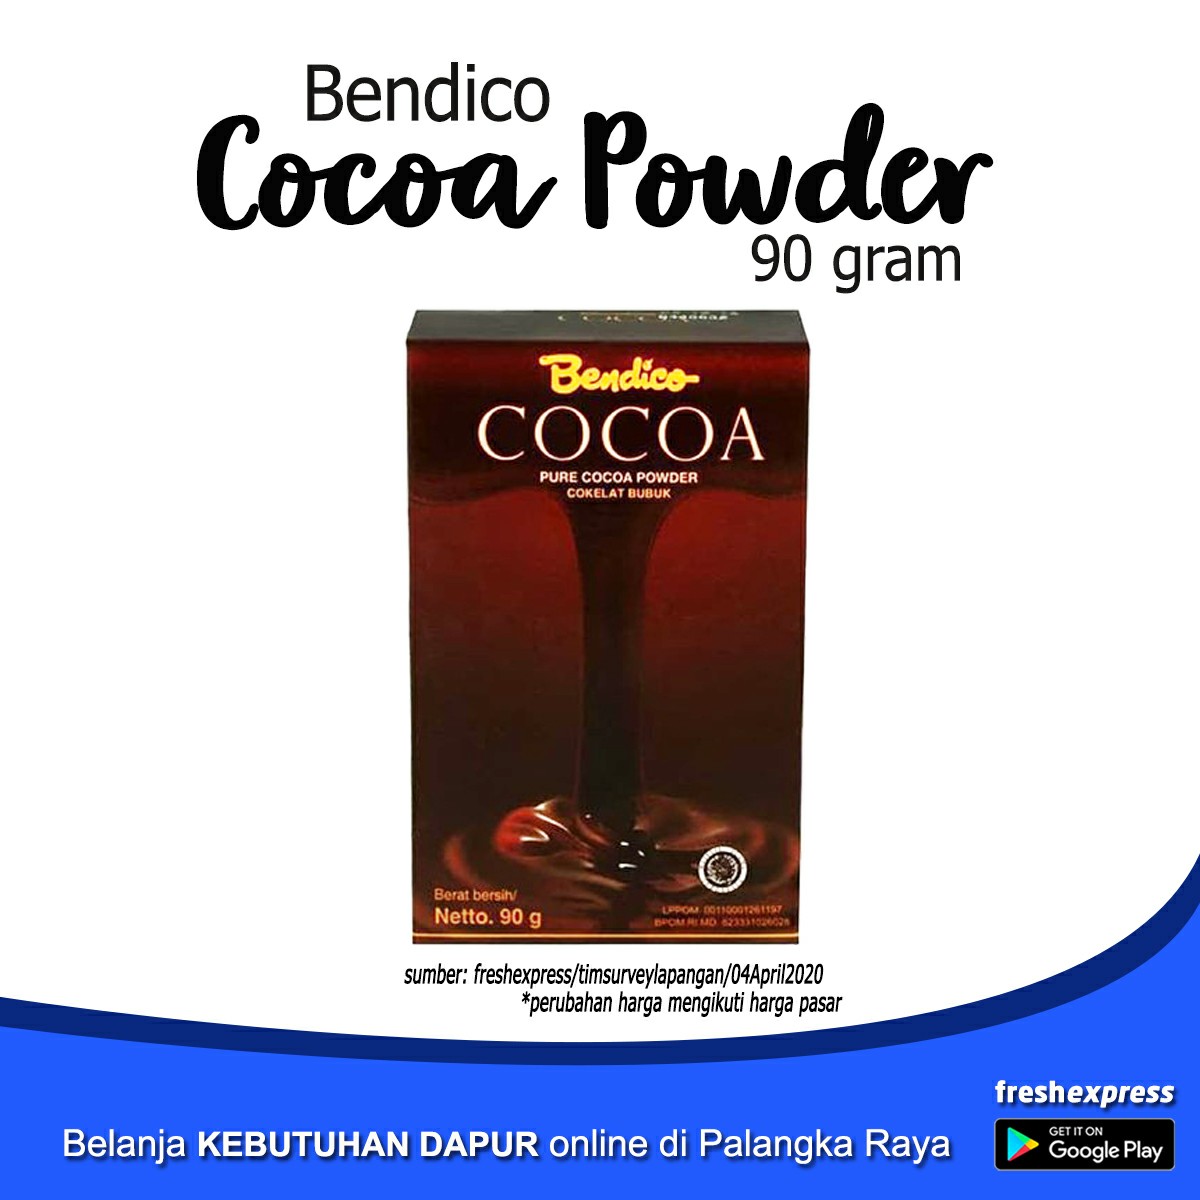 Bendico Cocoa Powder 90 Gram